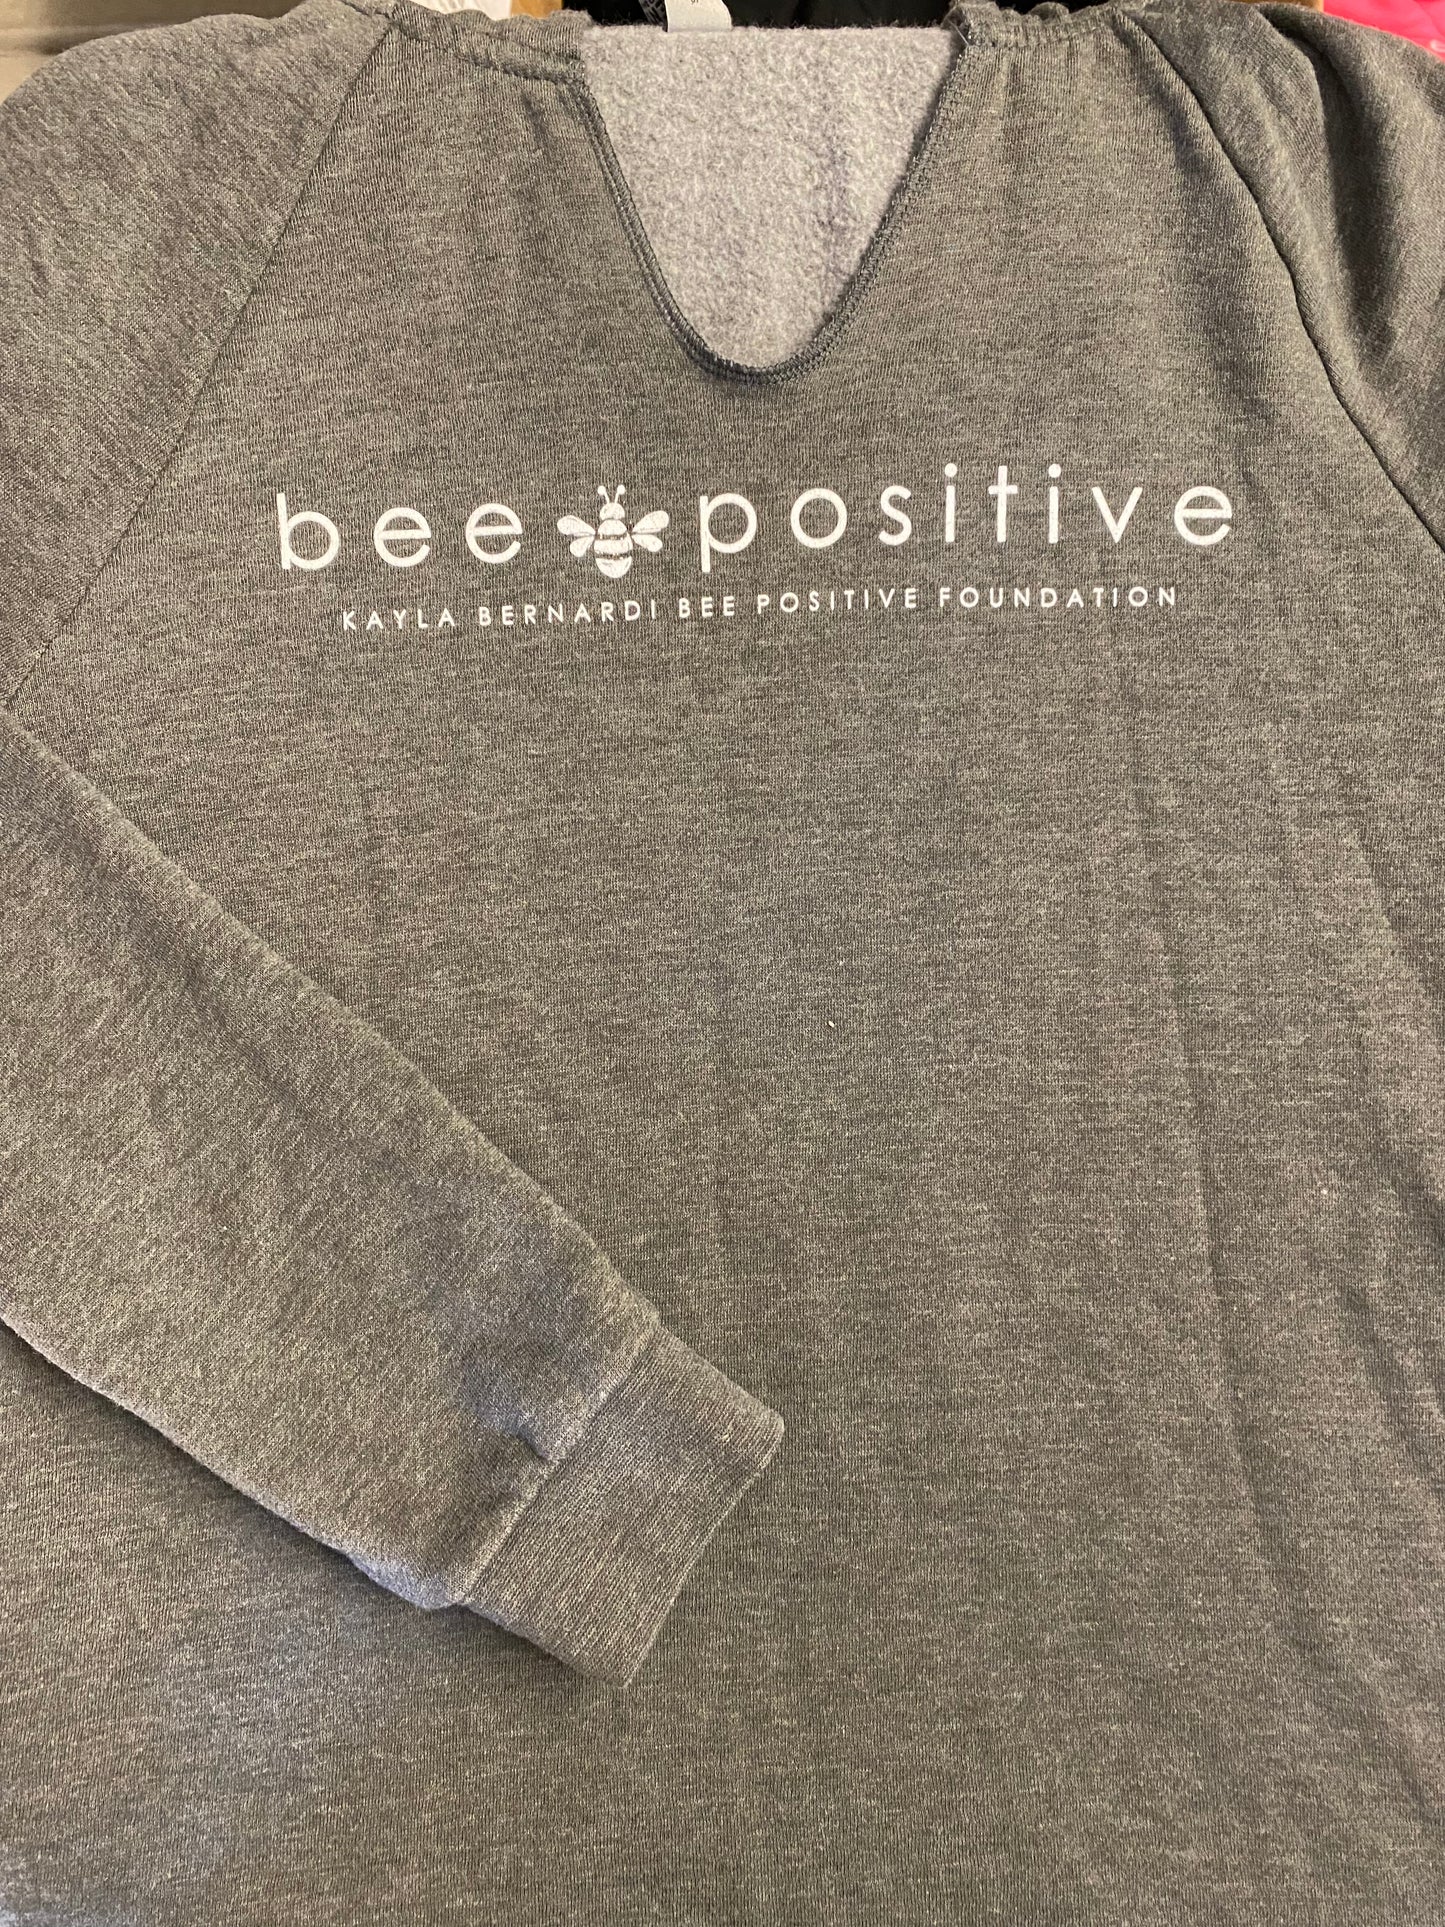 Women's grey sweatshirt with white bee